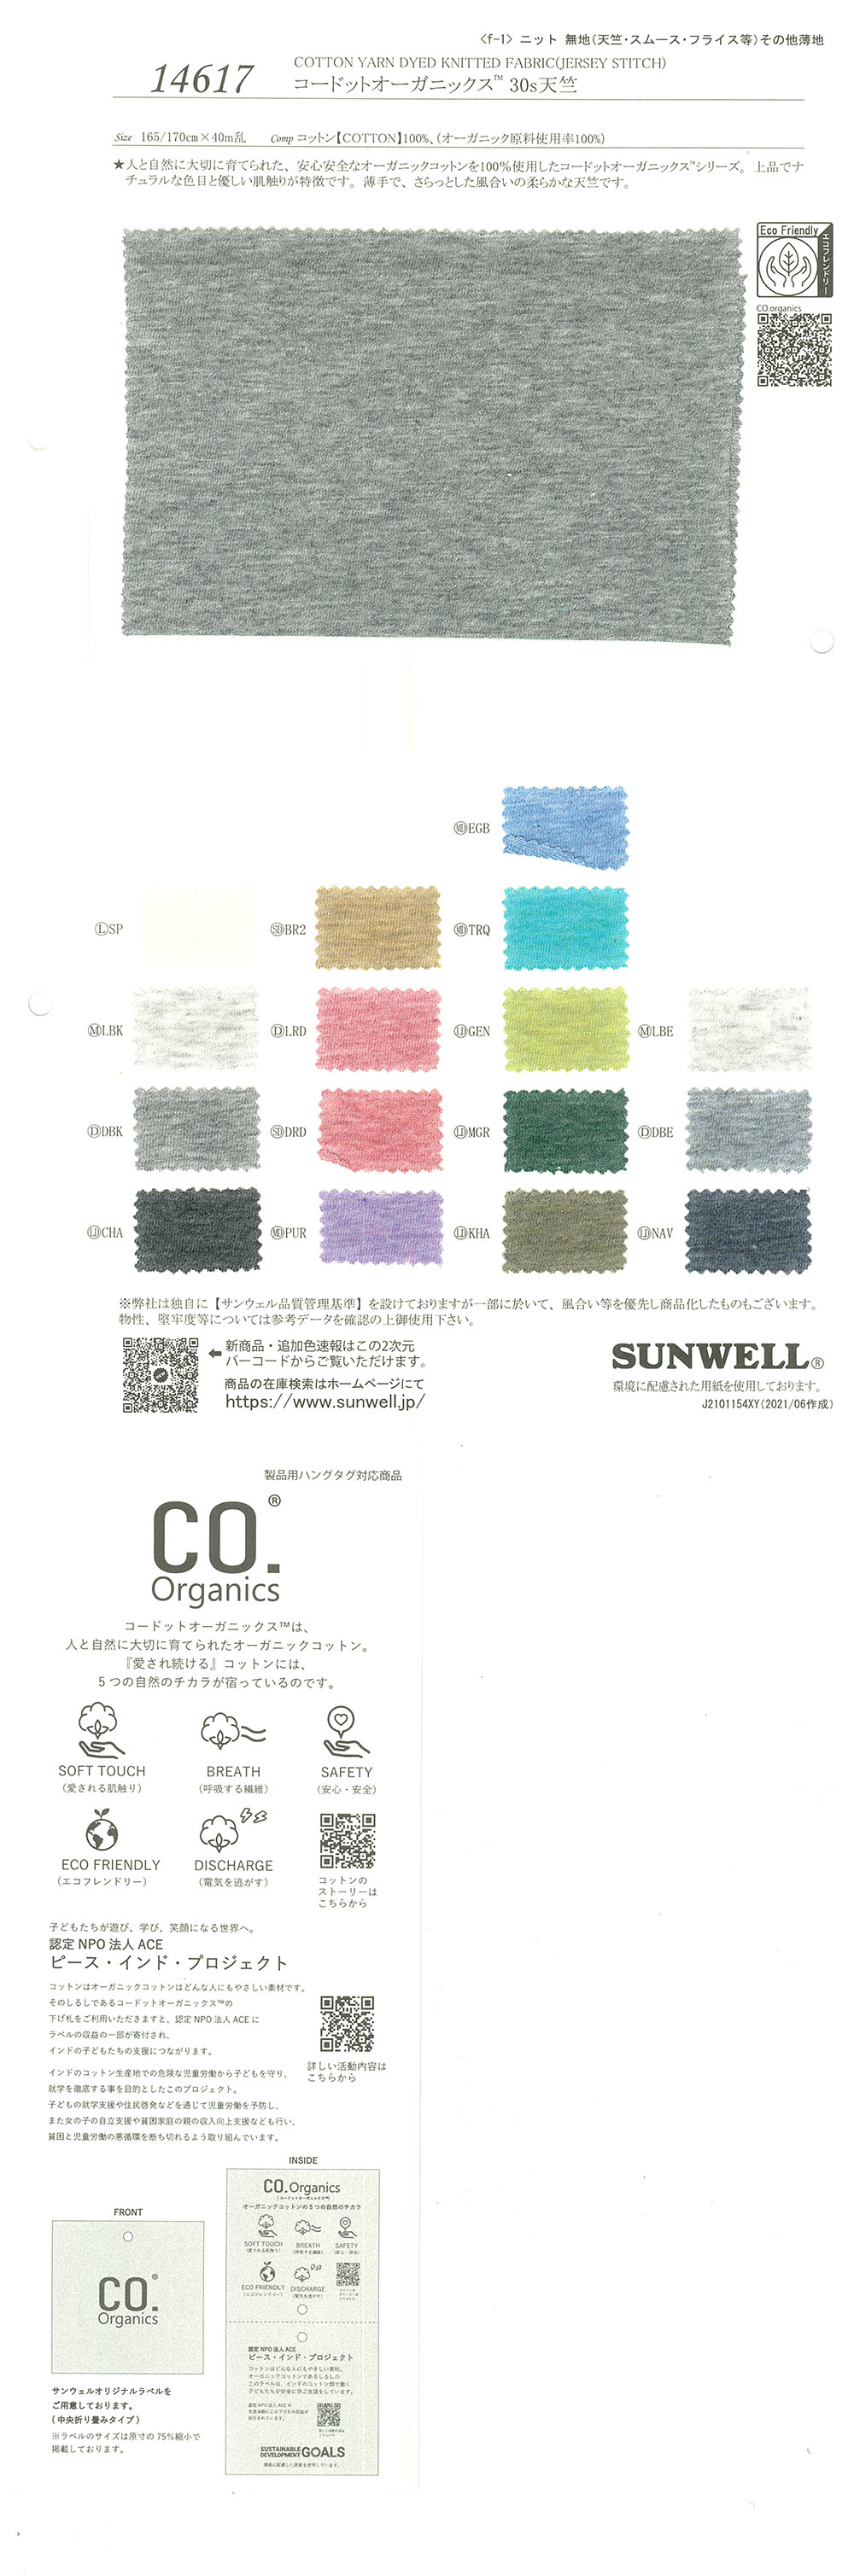 14617 Cordot Organics (R) 30 Single Thread Tianzhu Cotton[Textile / Fabric] SUNWELL